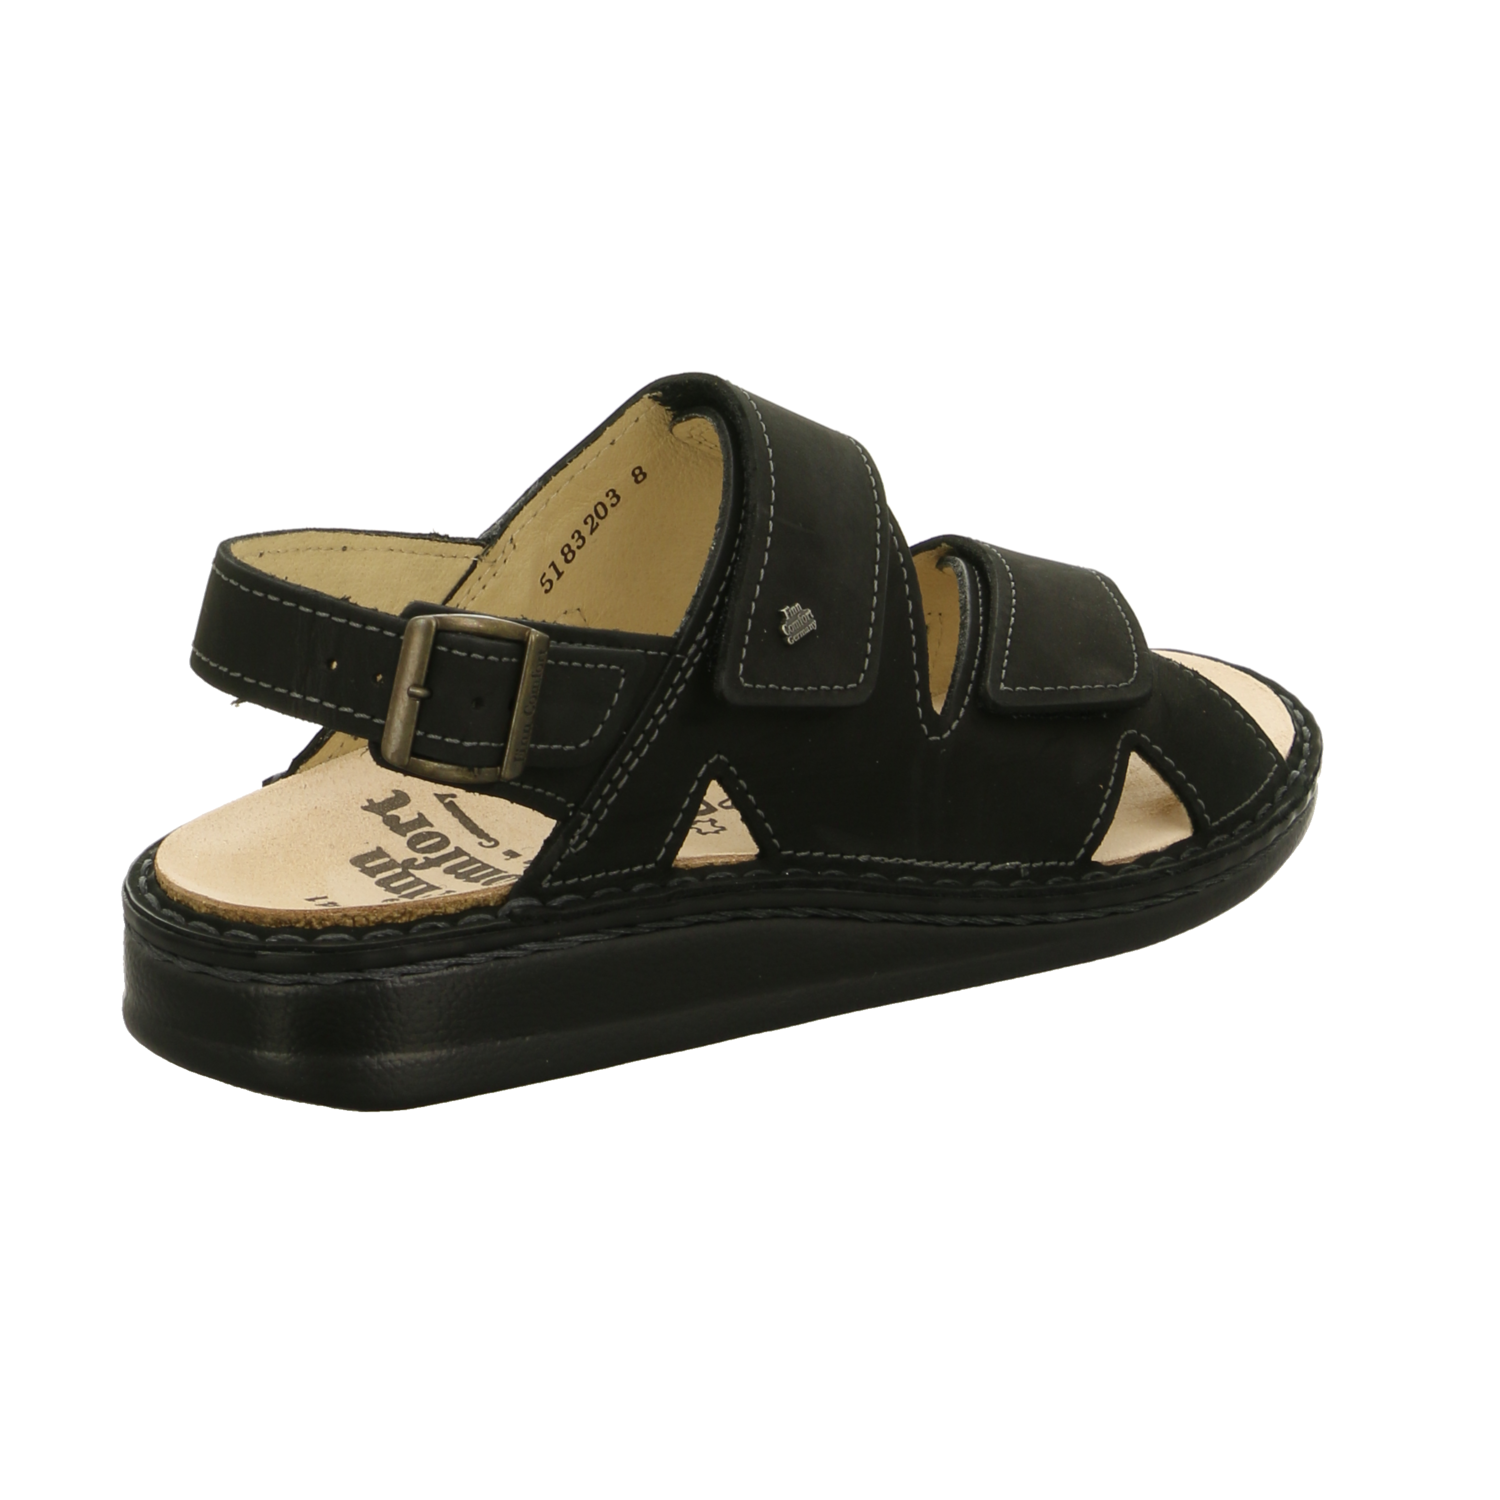 FinnComfort Sandalette schwarz